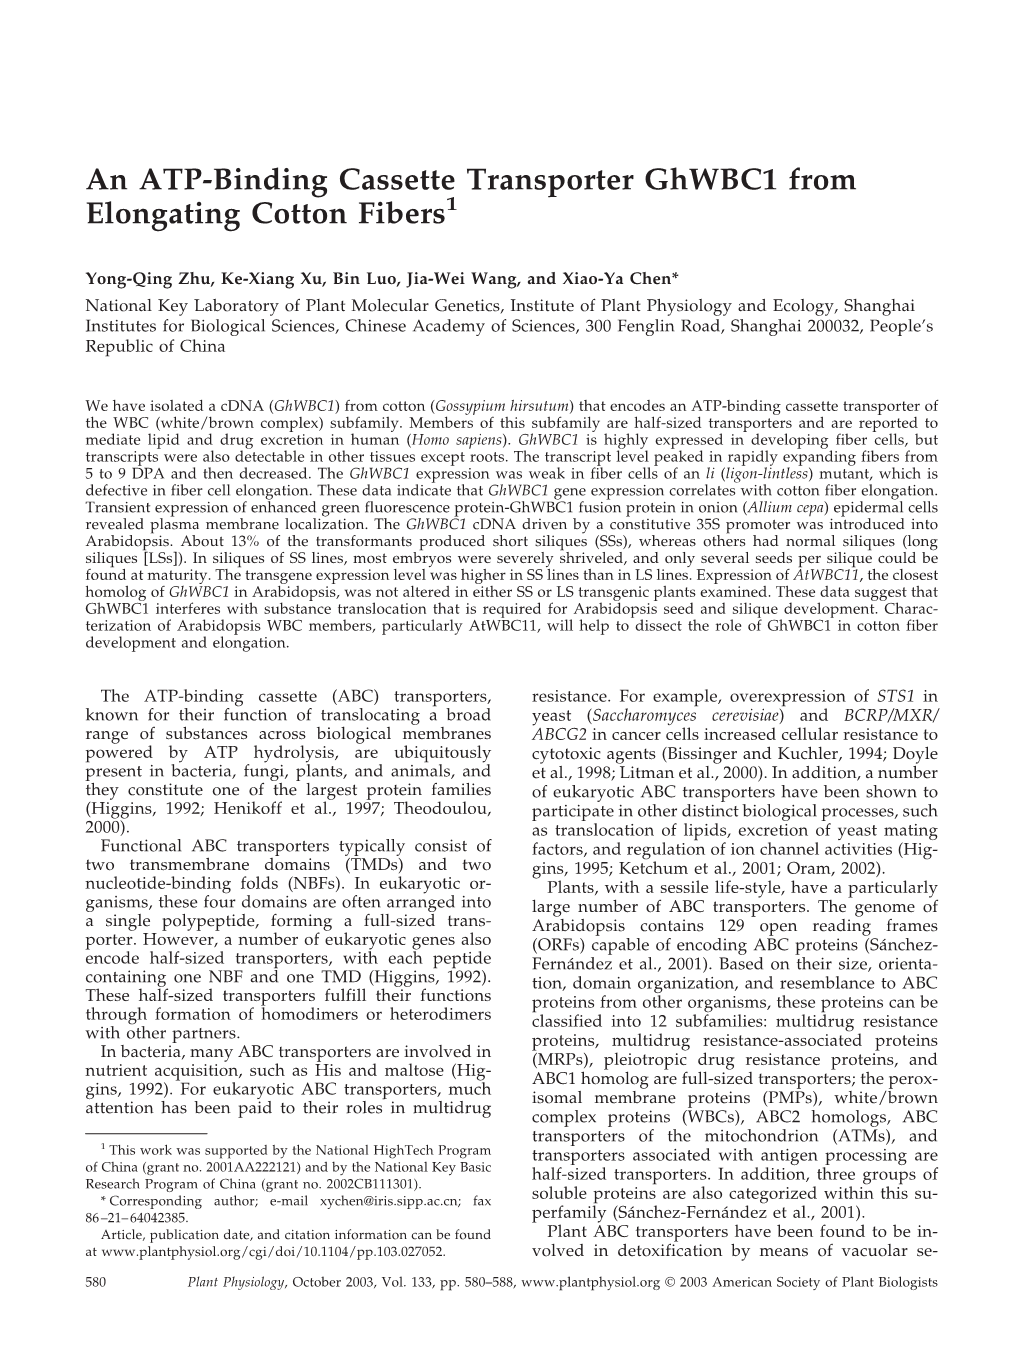 An ATP-Binding Cassette Transporter Ghwbc1 from Elongating Cotton Fibers1